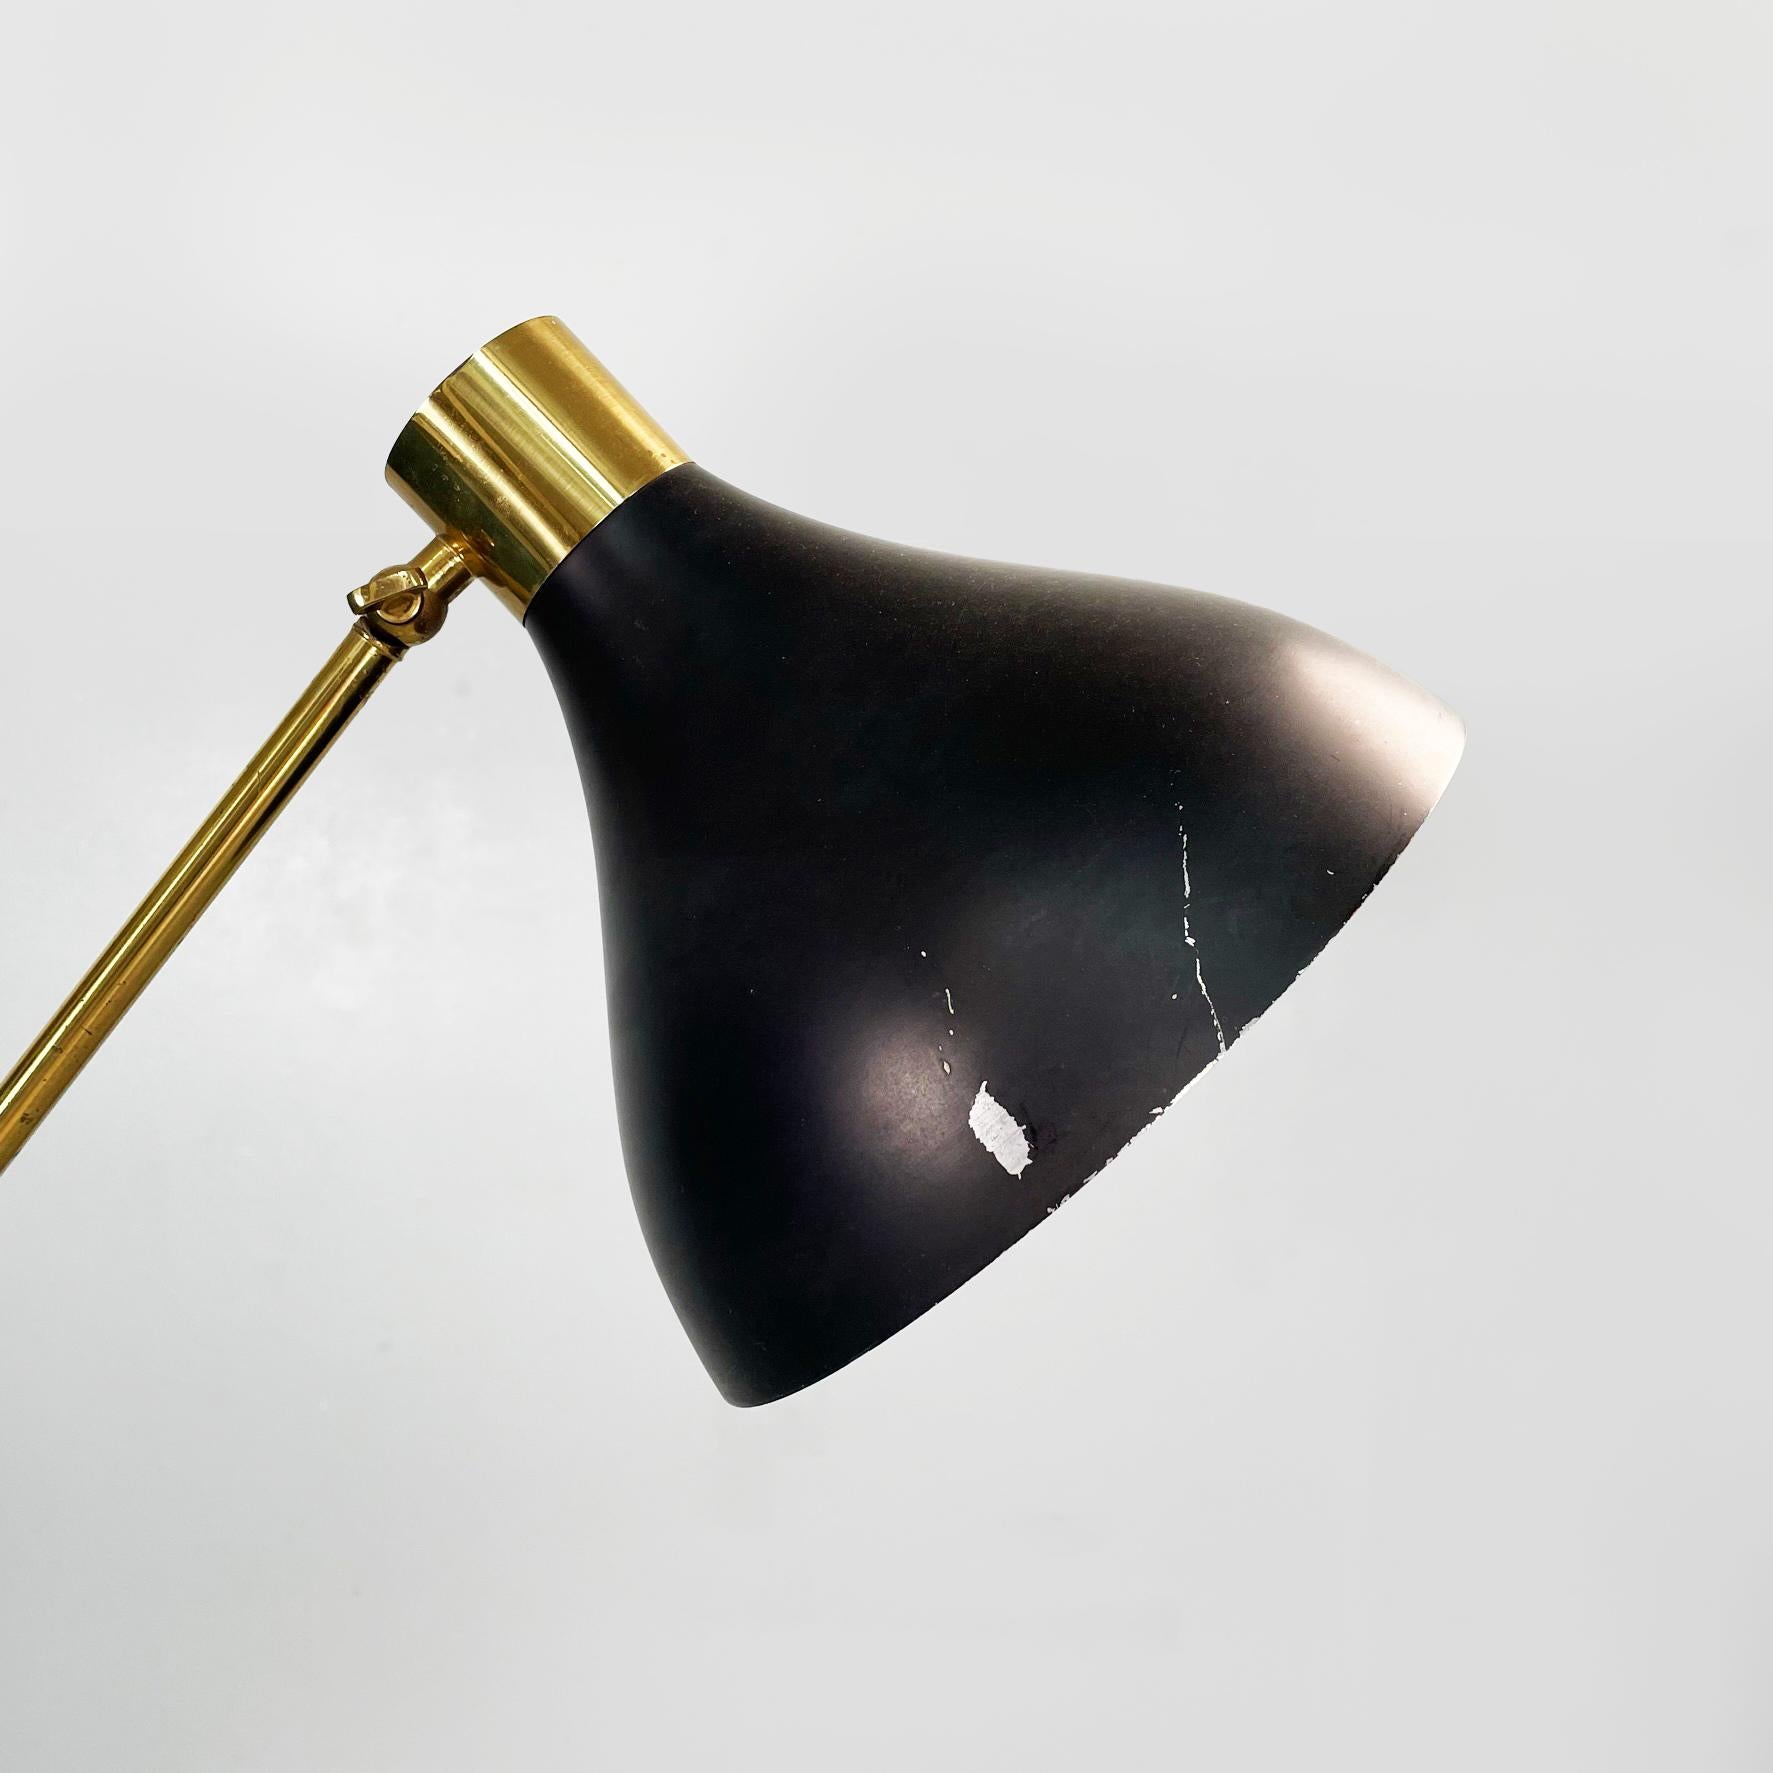 Italian Mid-Century Modern Adjustable Brass Metal Floor Lamp by Stilux, 1950s For Sale 1